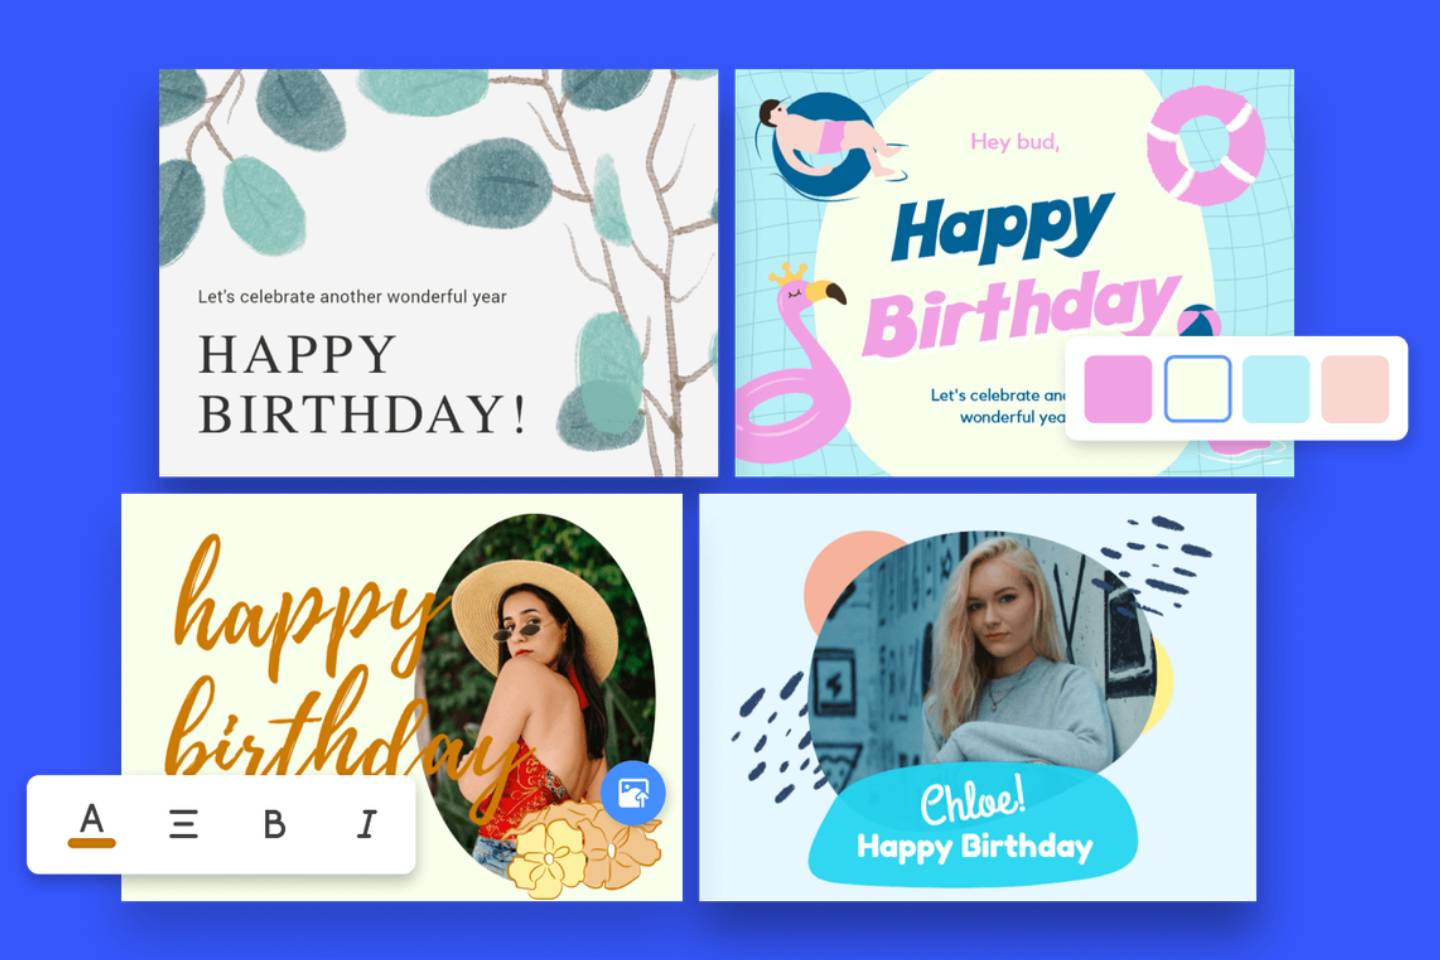 Make birthday card design online easily with Fotor birthday card maker